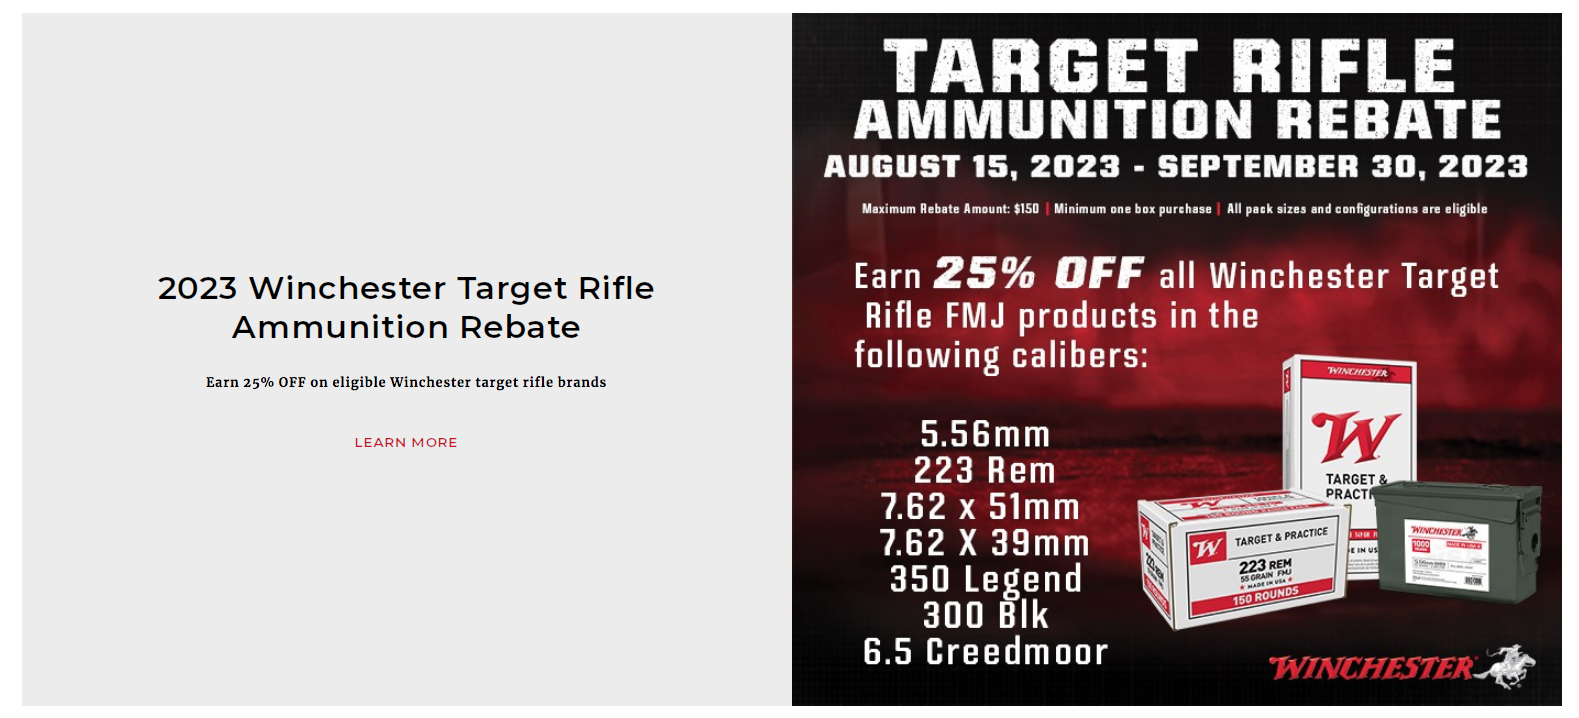 2023-winchester-target-rifle-ammunition-rebate-8-15-23-9-30-23-h-h-shooting-sports